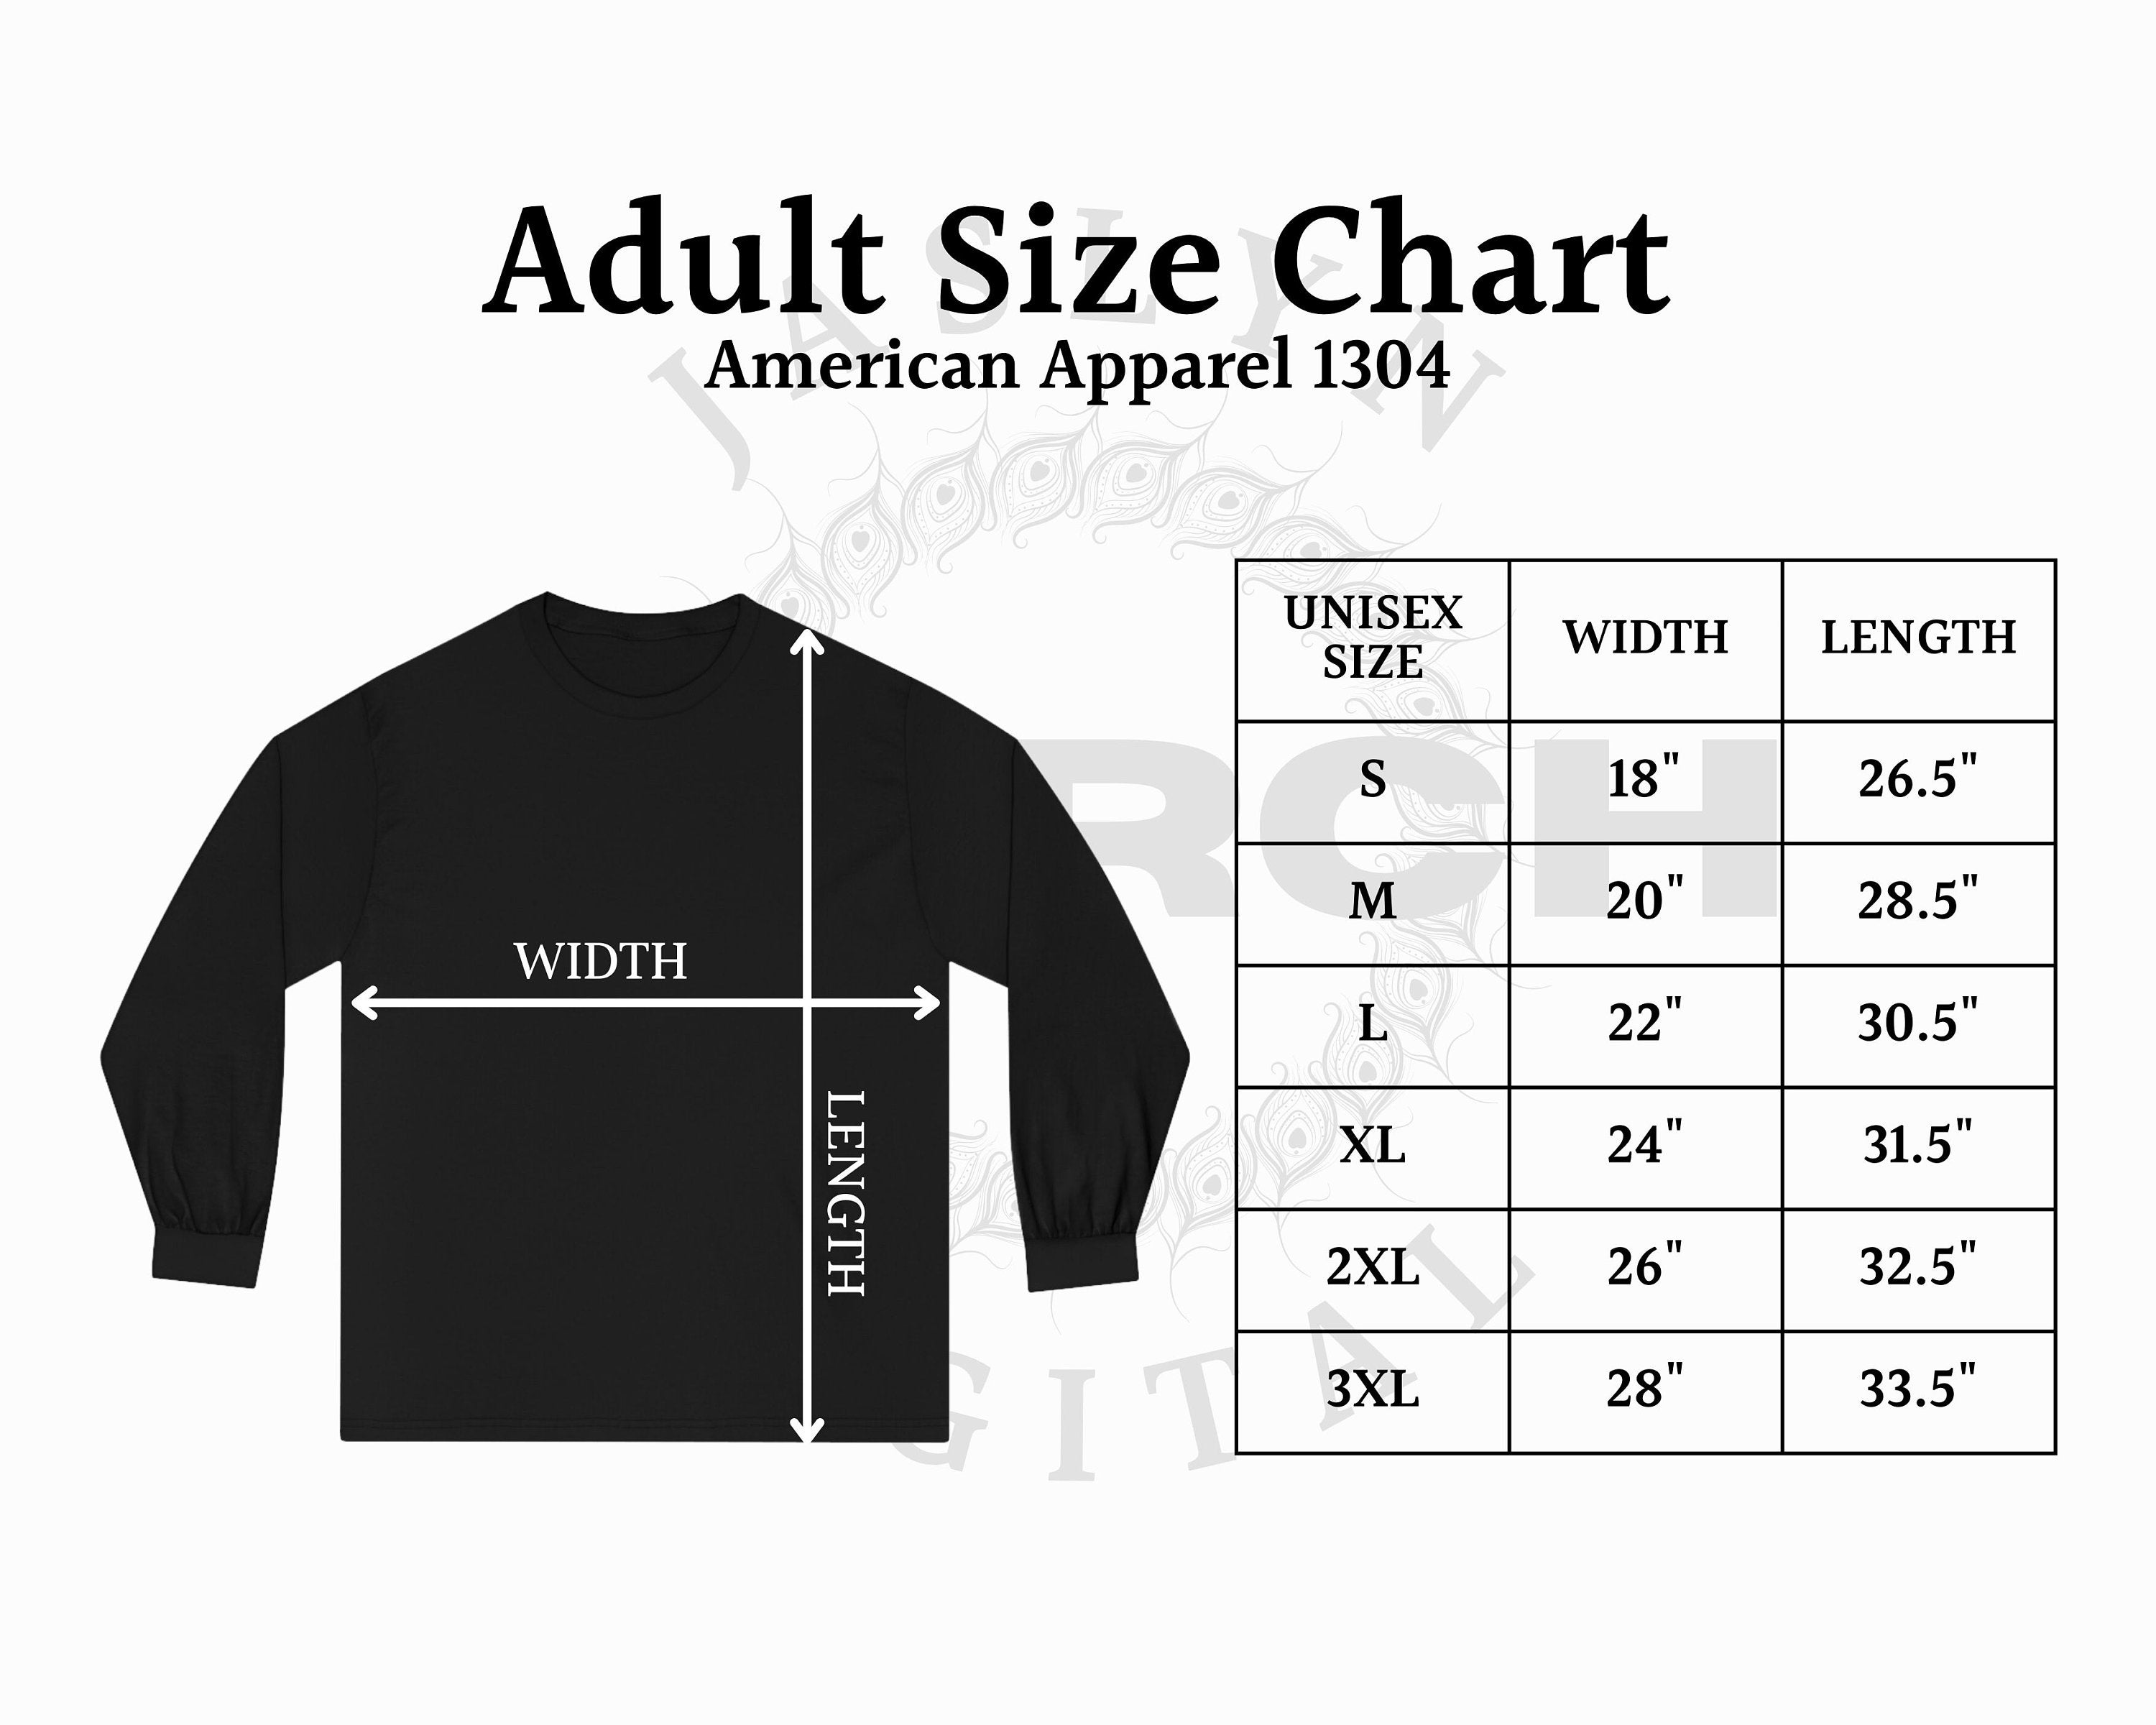 Apparel size chart